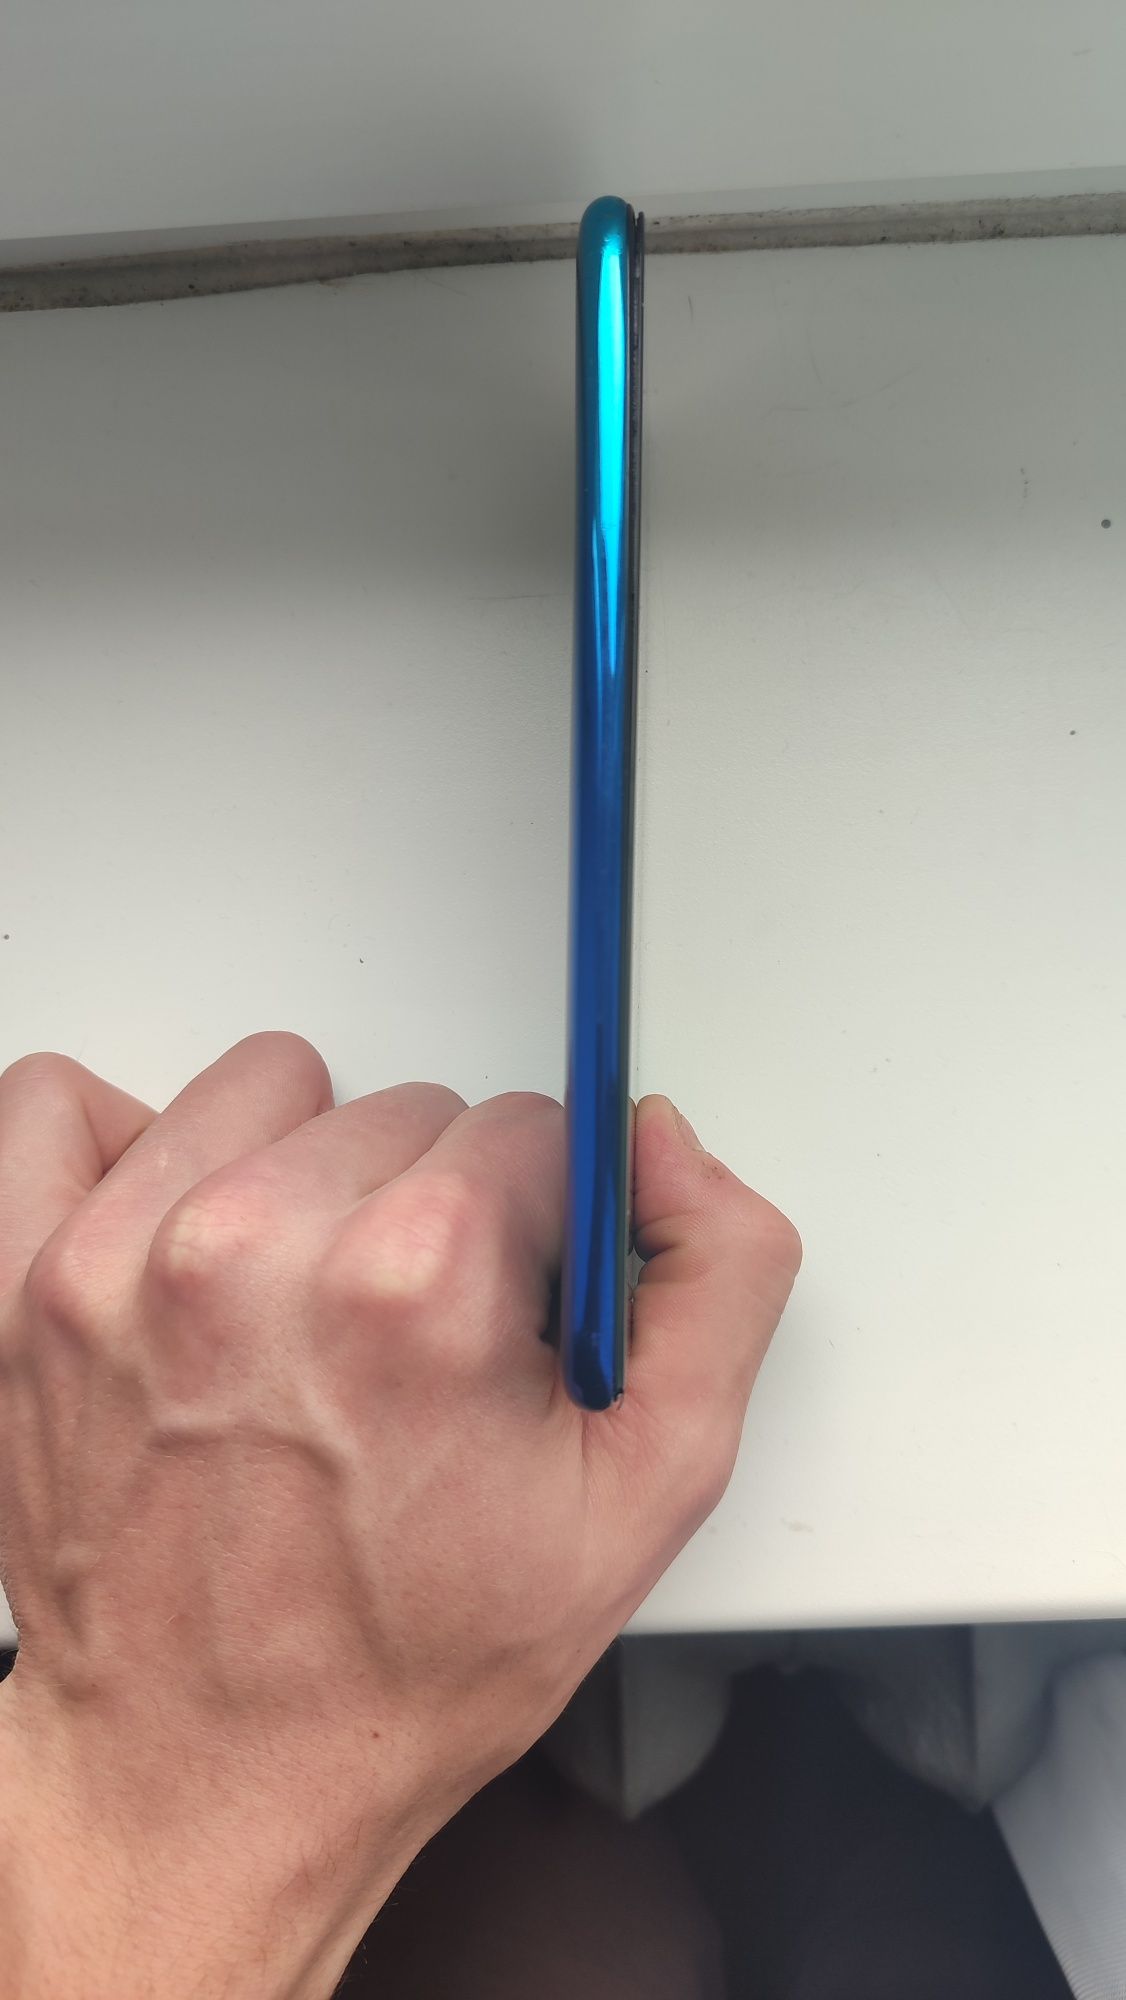 Huawei P Smart 2019 3/64GB Aurora Blue, топлений